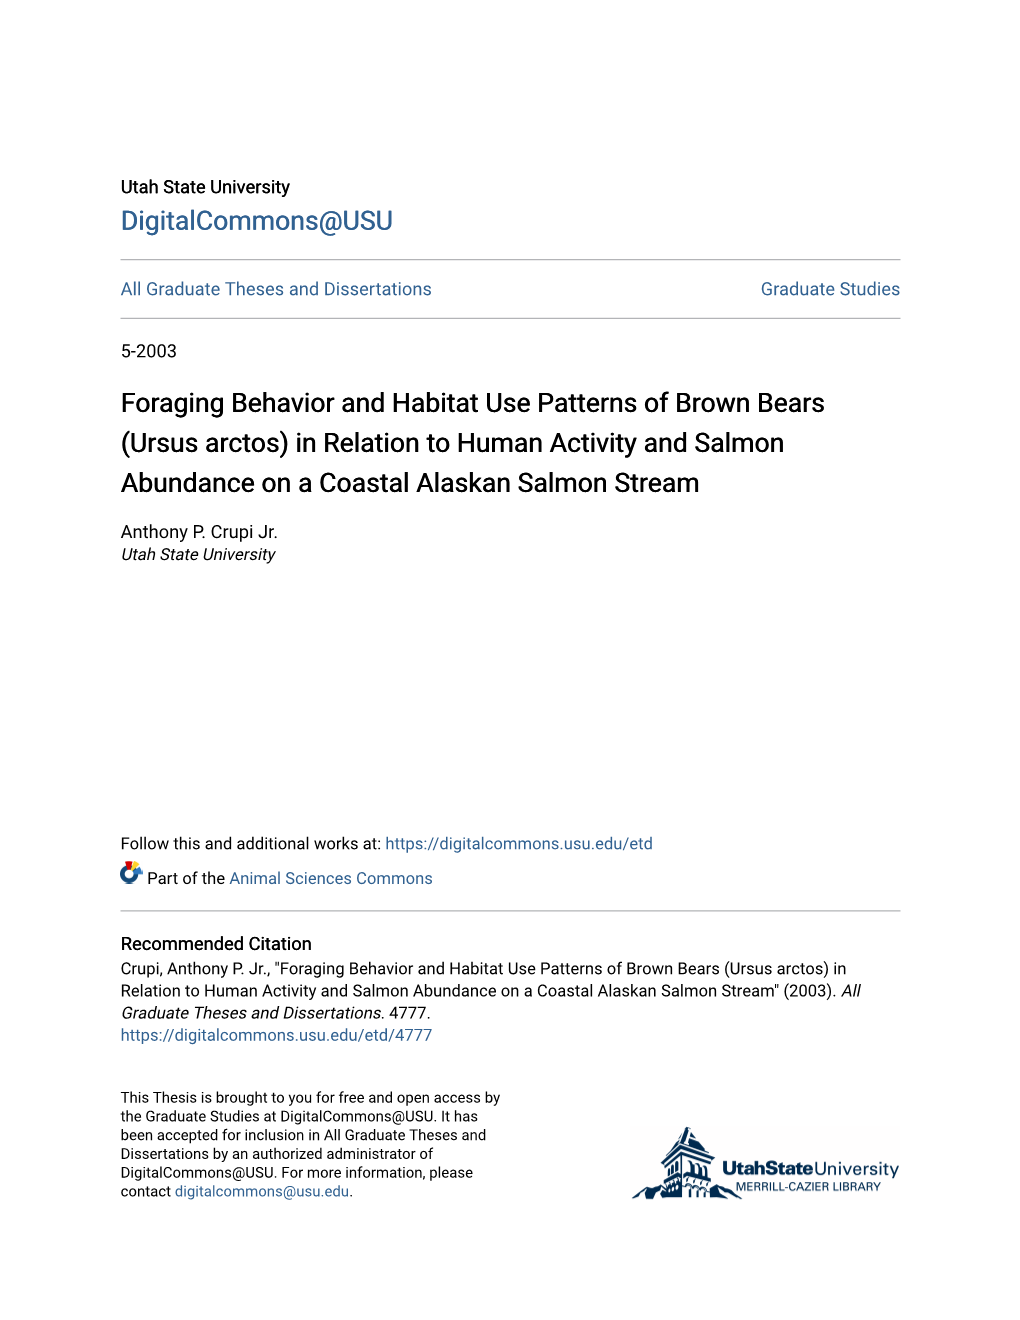 Foraging Behavior and Habitat Use Patterns of Brown Bears (Ursus Arctos) in Relation to Human Activity and Salmon Abundance on a Coastal Alaskan Salmon Stream